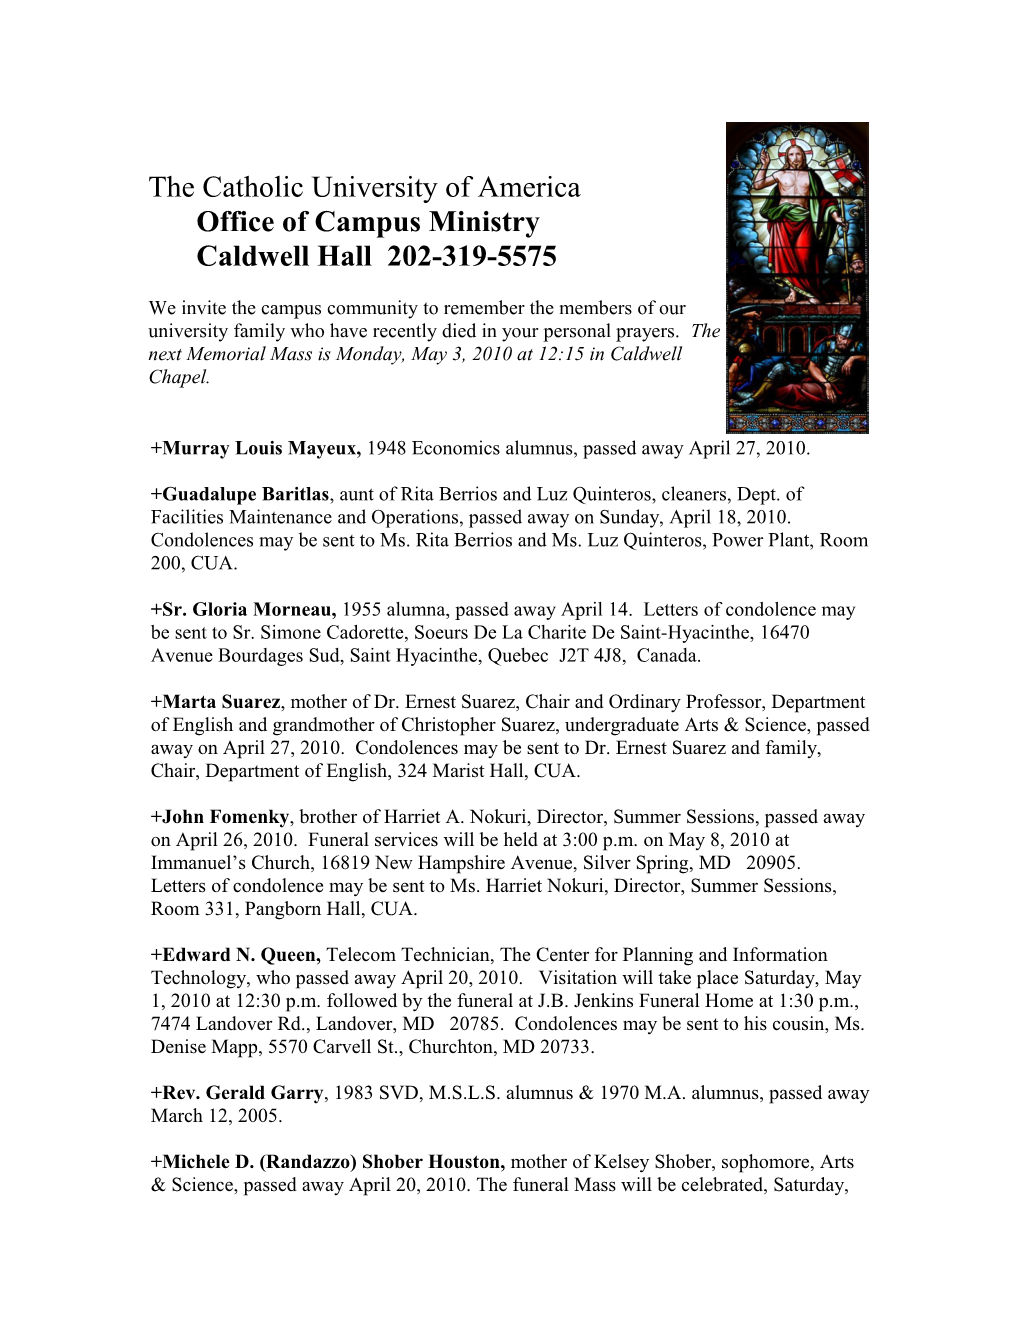 The Catholic University of America s12